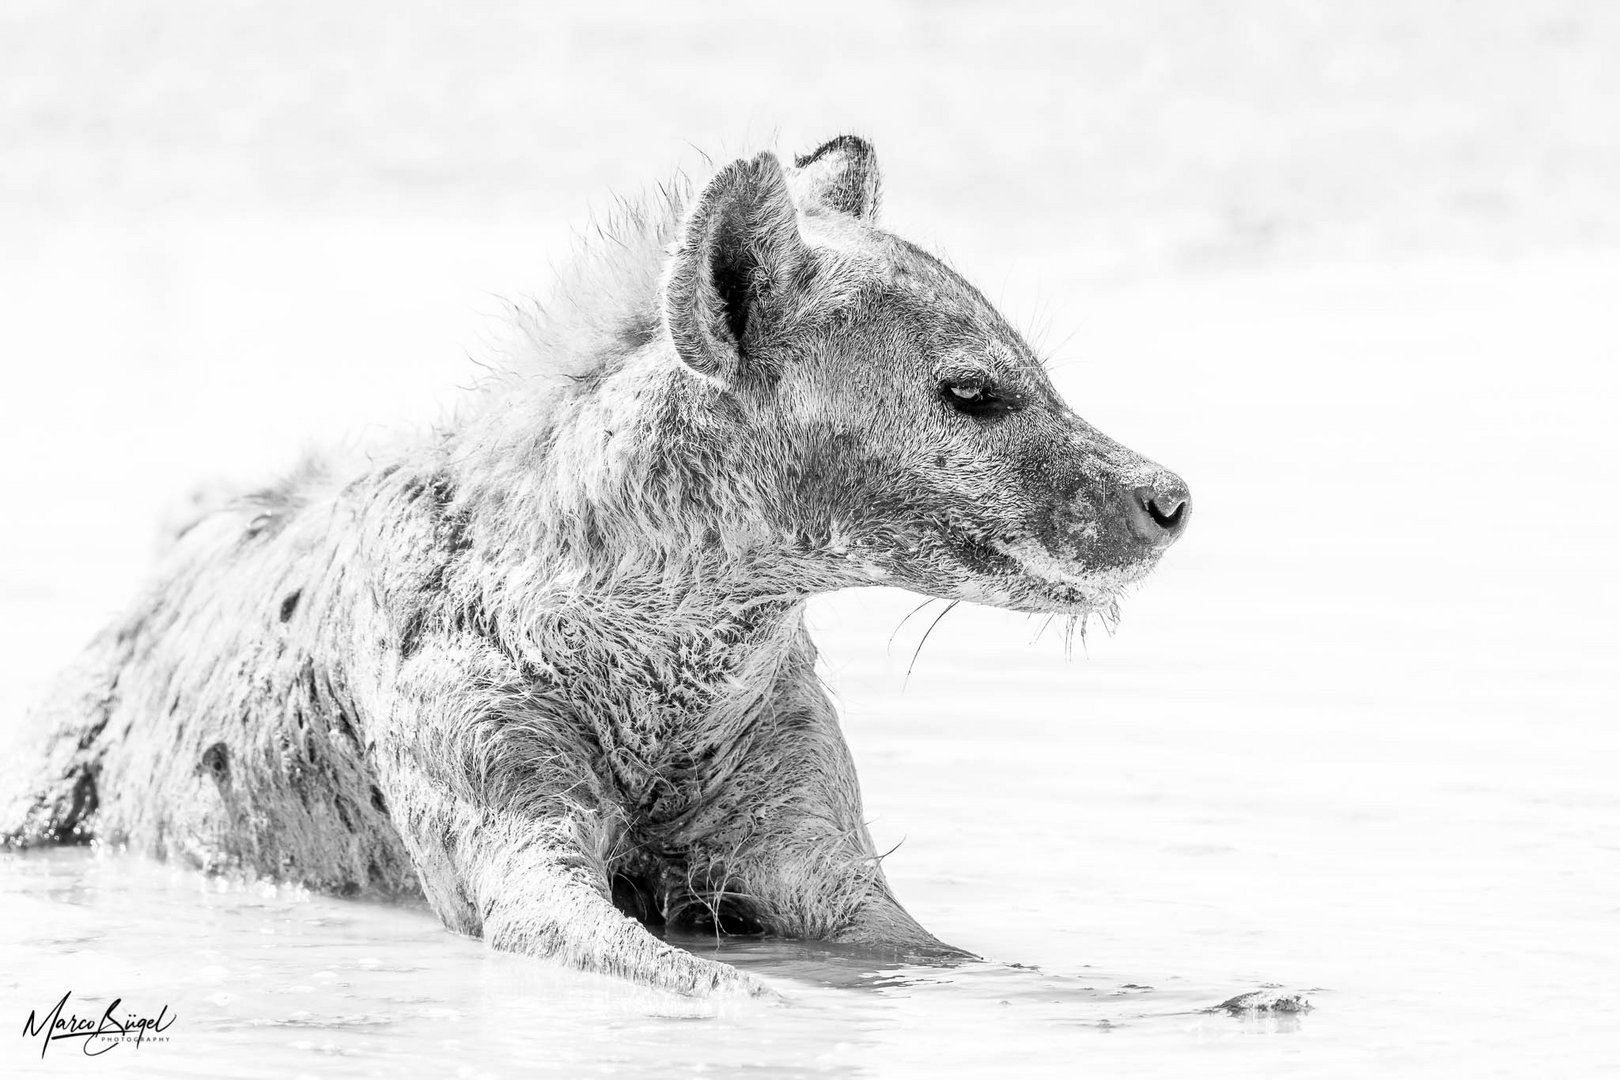 Mud bathing spotted Hyena in B&W